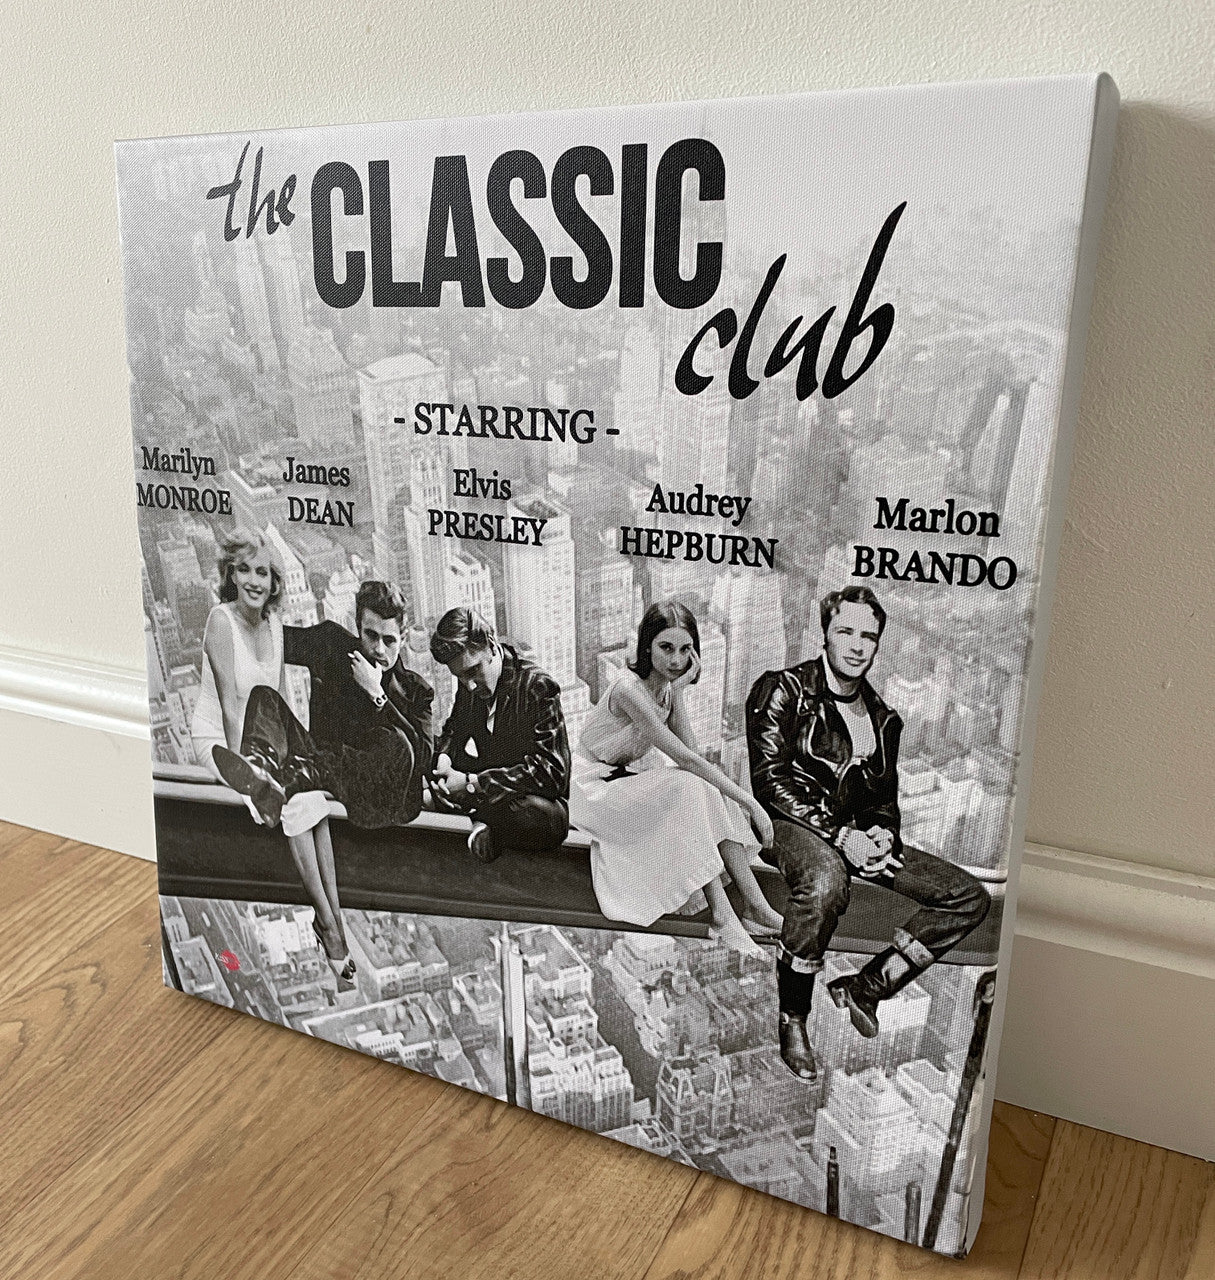 Classic Club KiSS Canvas - Marilyn Monroe James Dean, Elvis, Marlon Brando, Audrey Hepburn - Breakfast Club inspiration- Art, Wall Decor - Unique Home Gift Idea